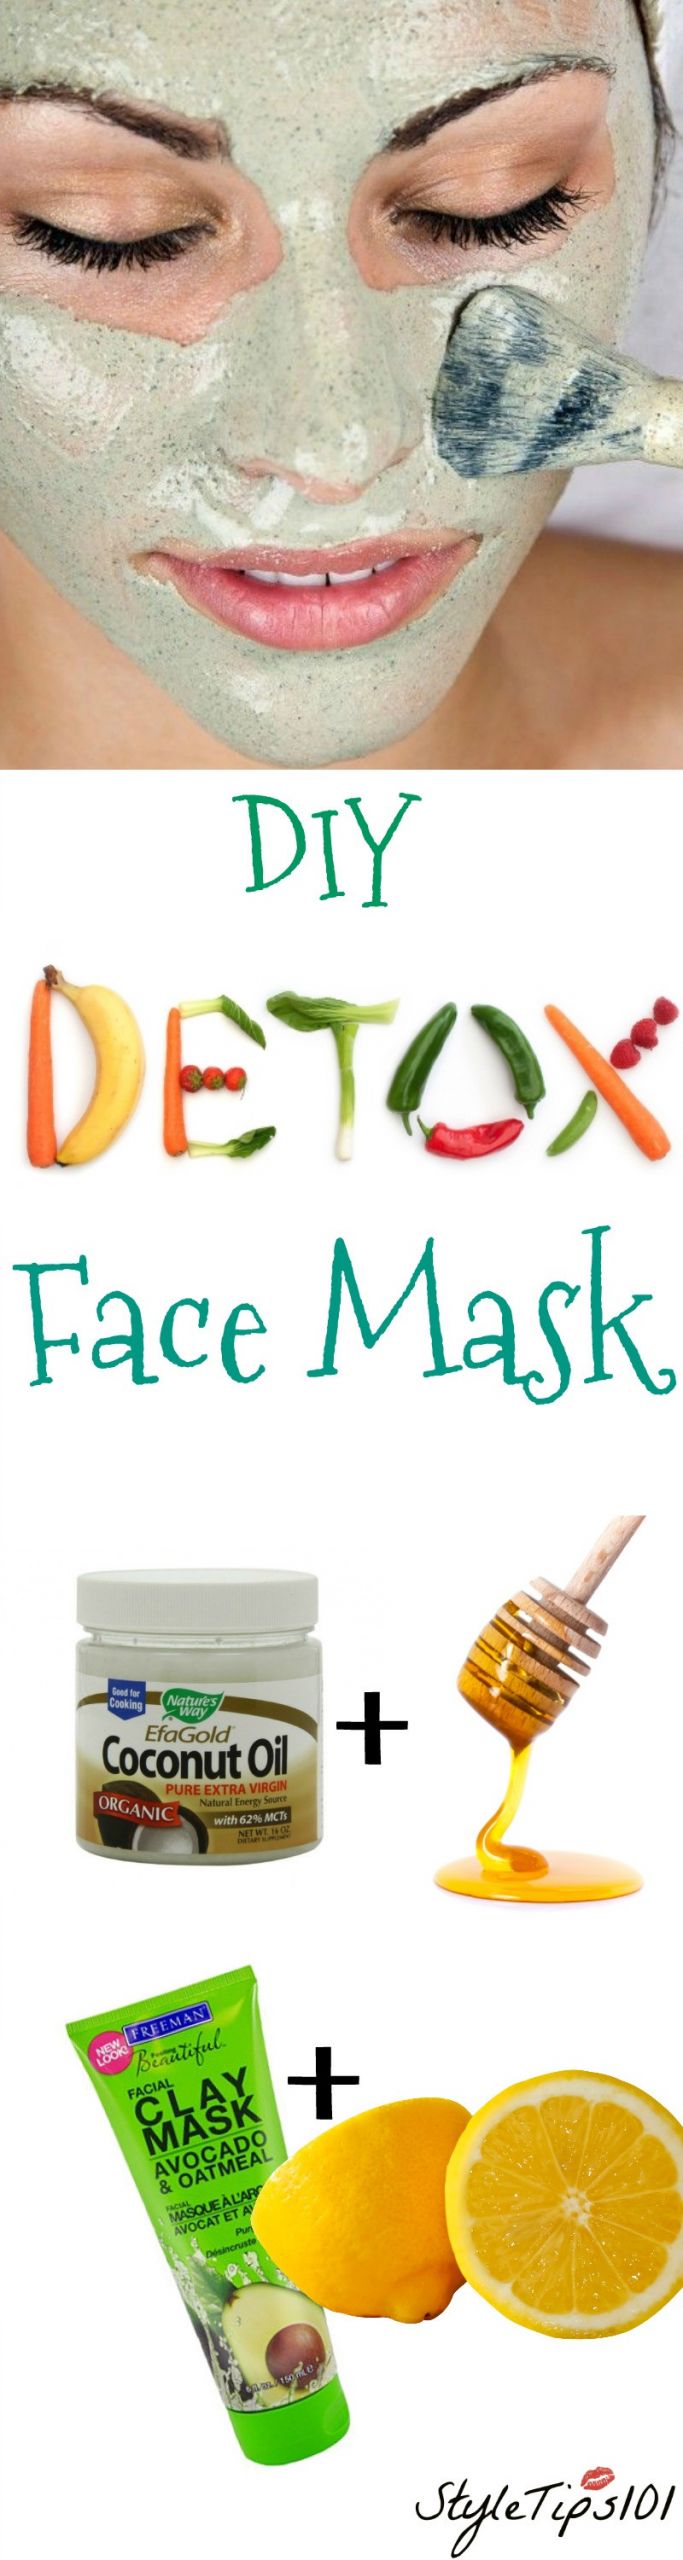 DIY Detox Mask
 DIY Detox Face Mask